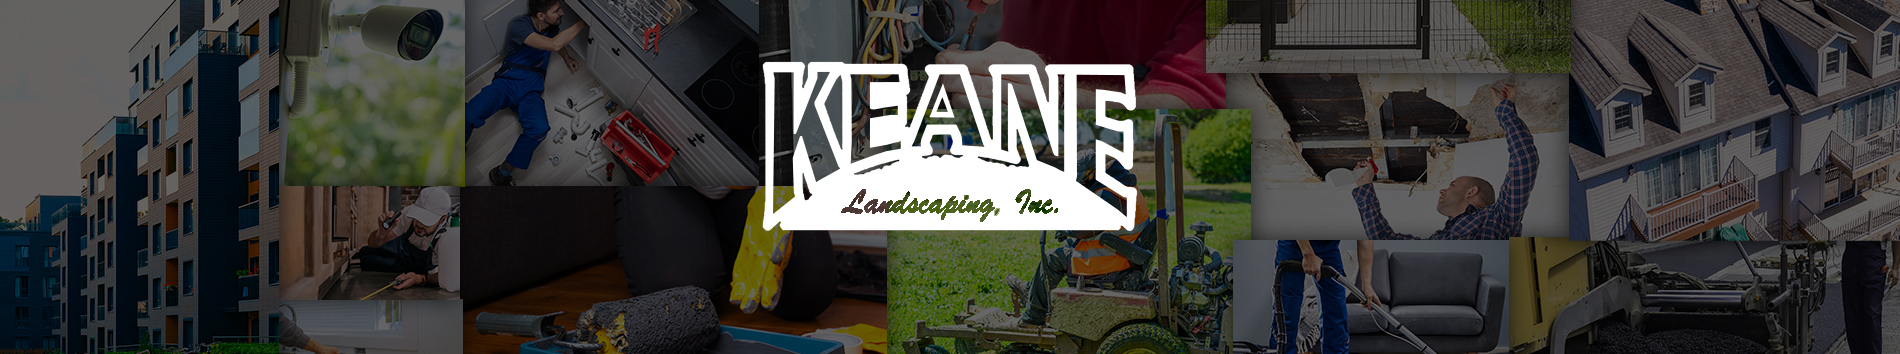 Keane Landscaping, Inc.